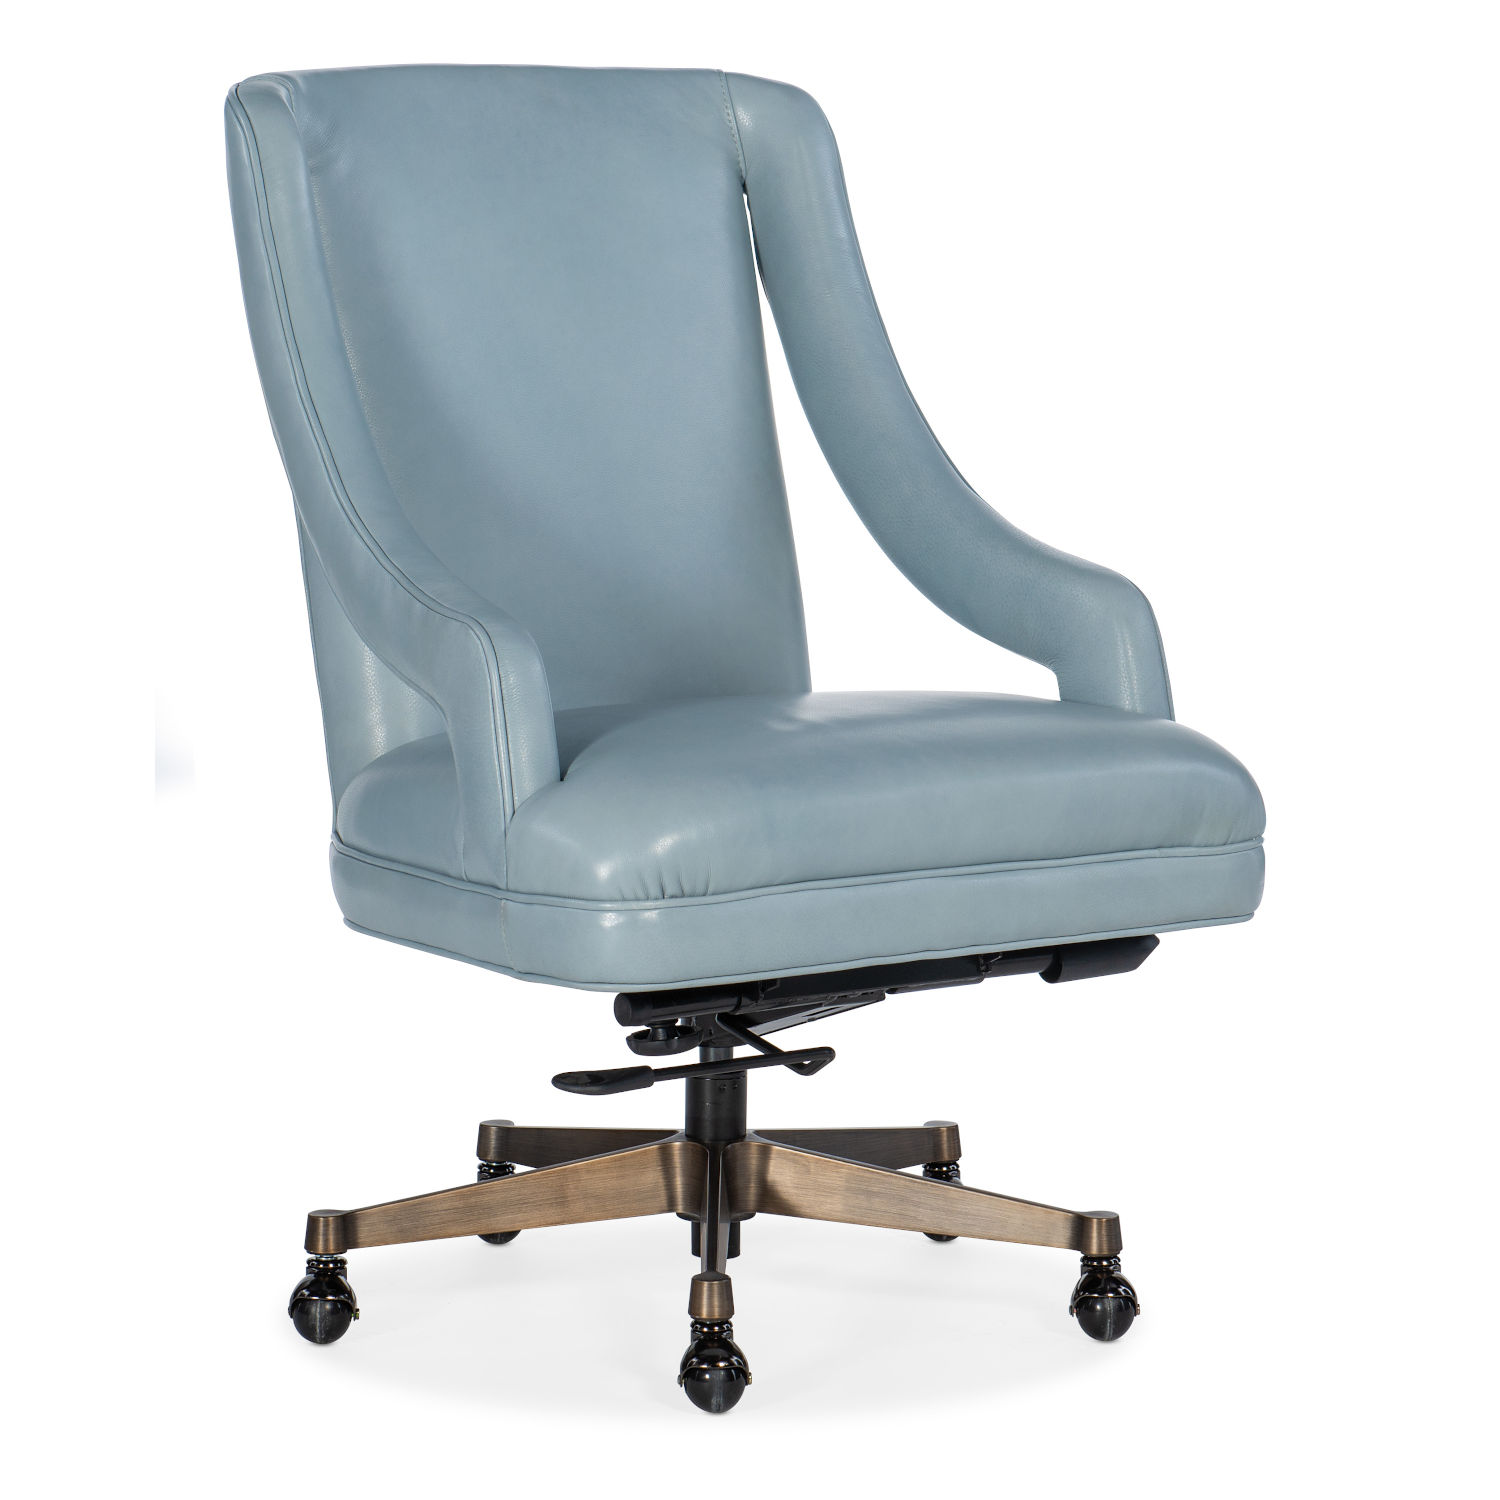 Hooker Furniture Meira Blue and Silver Executive Swivel Tilt Chair